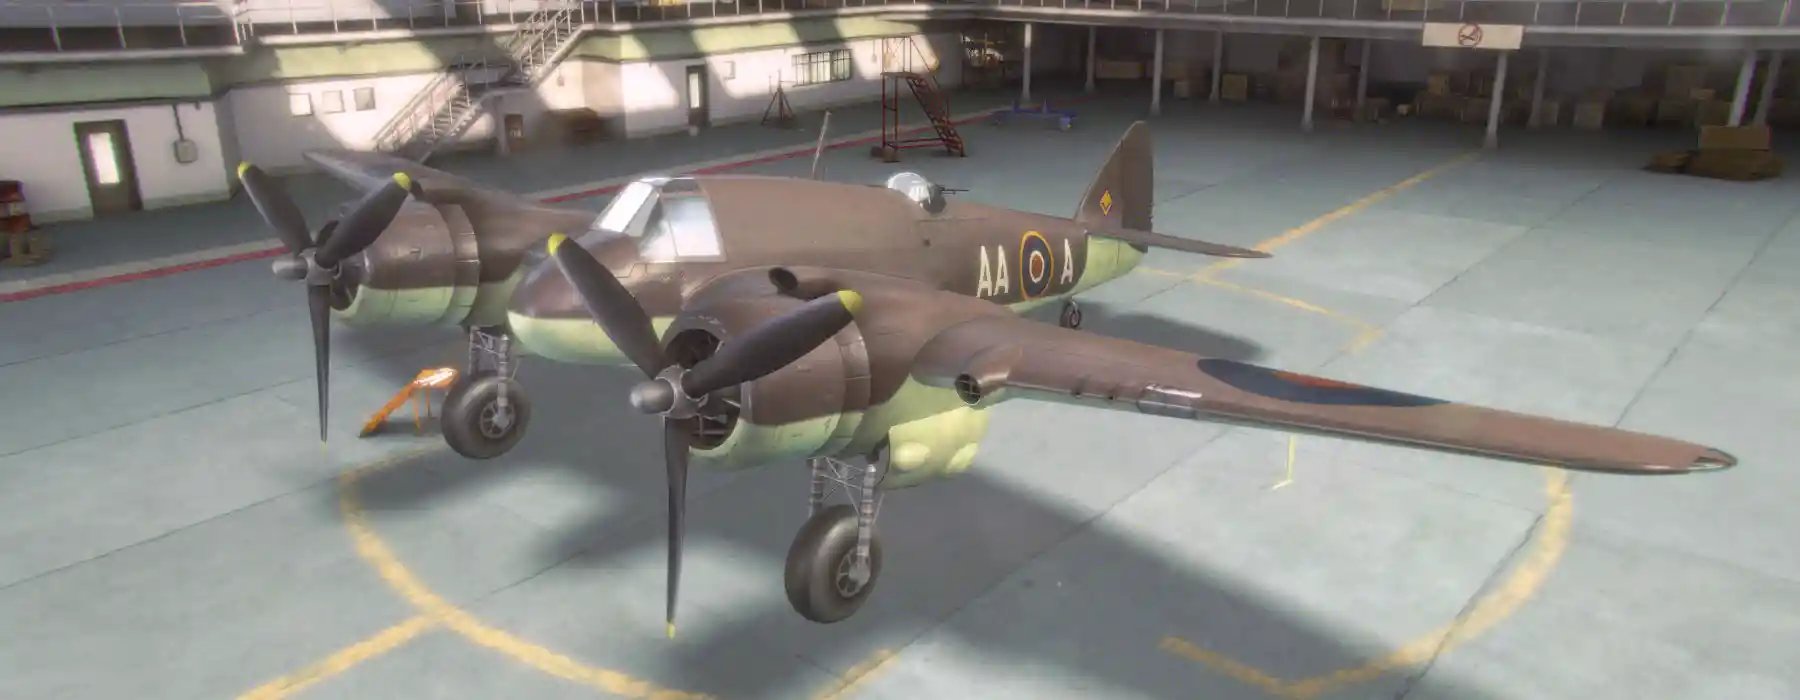 Beaufighter_001.jpg